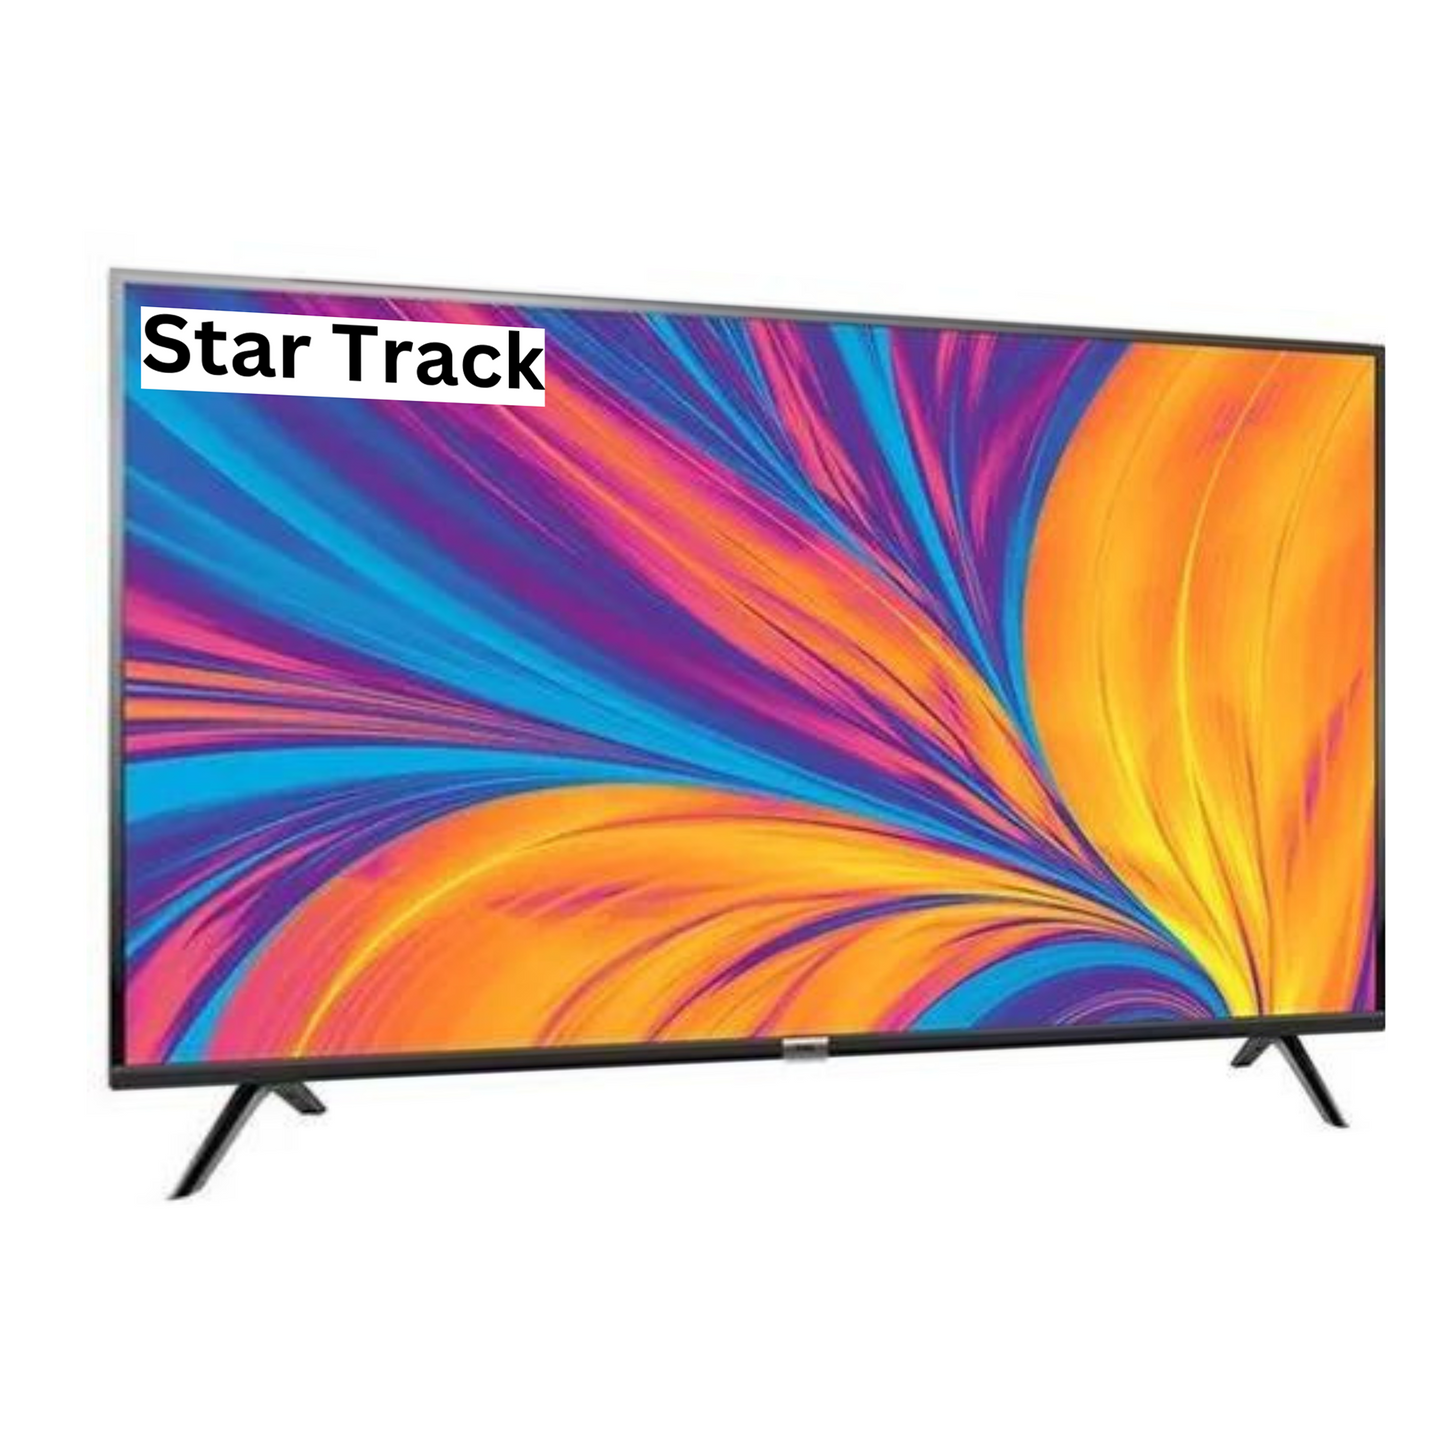 Star Track 32 inch LED TV, ST-32D-AZ2200